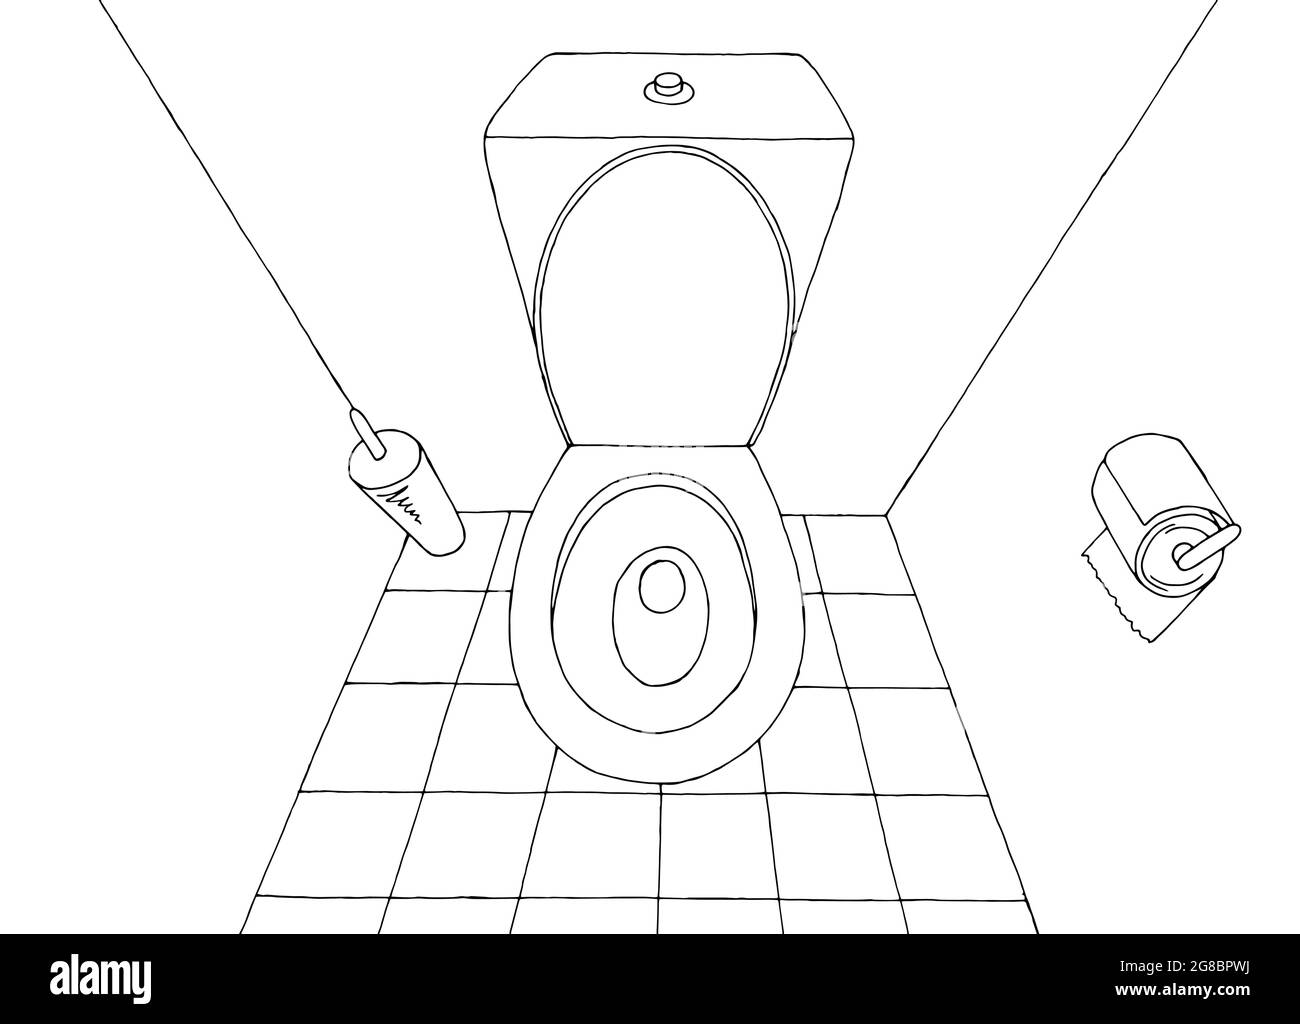 Toilet graphic interior black white sketch illustration vector Stock Vector